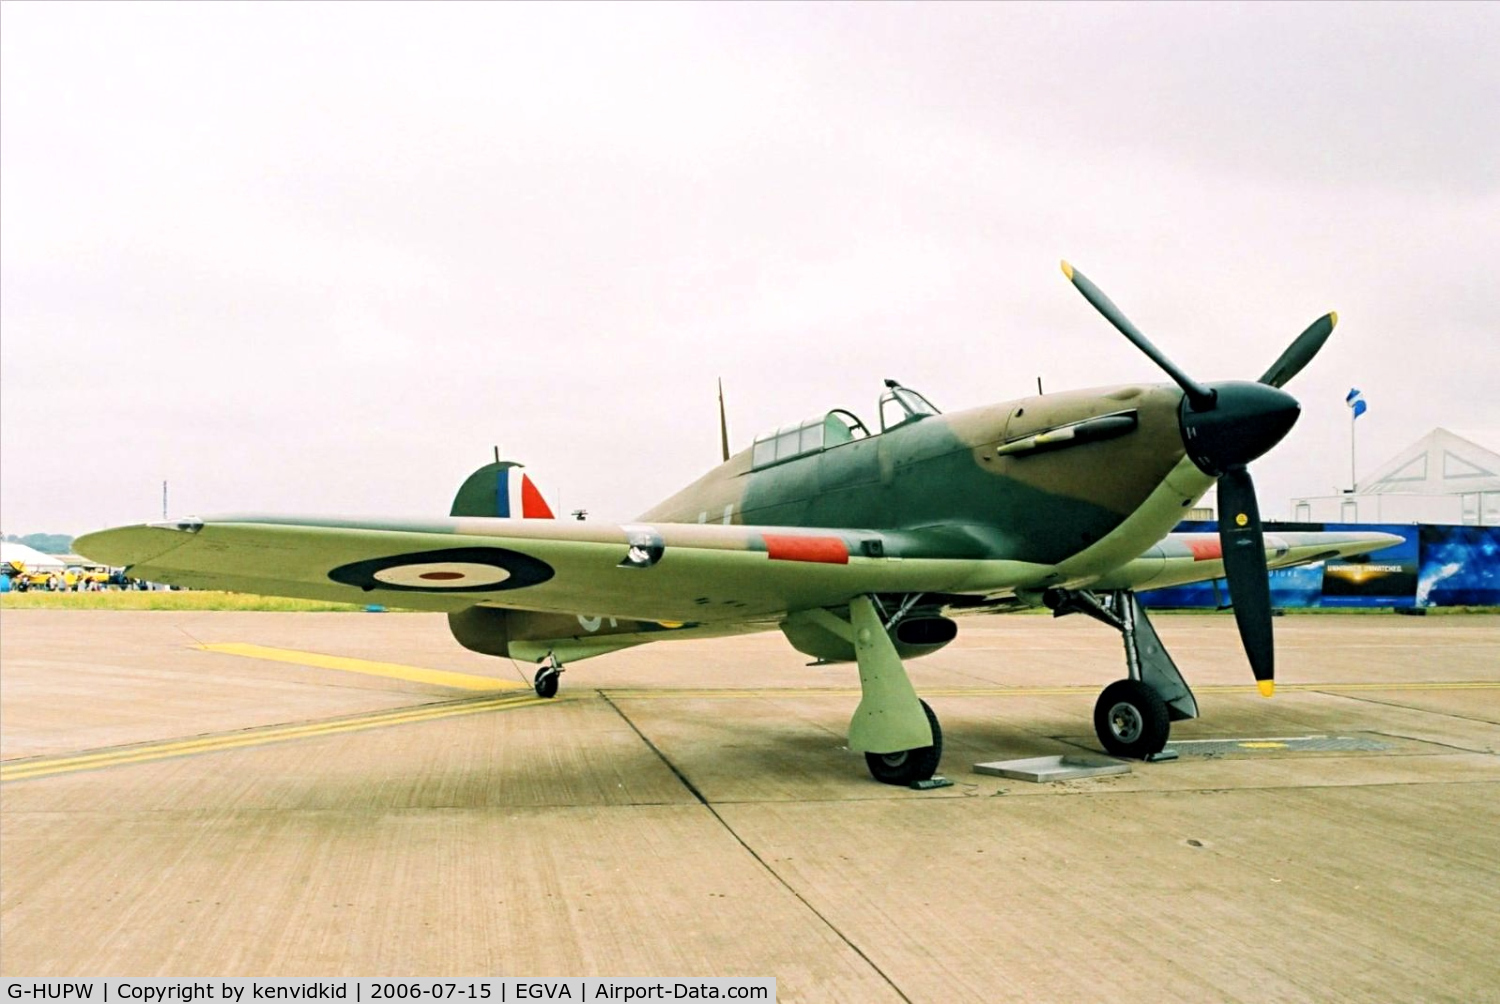 G-HUPW, 1940 Hawker Hurricane I C/N G592301, G-HUPW on static display at RIAT.